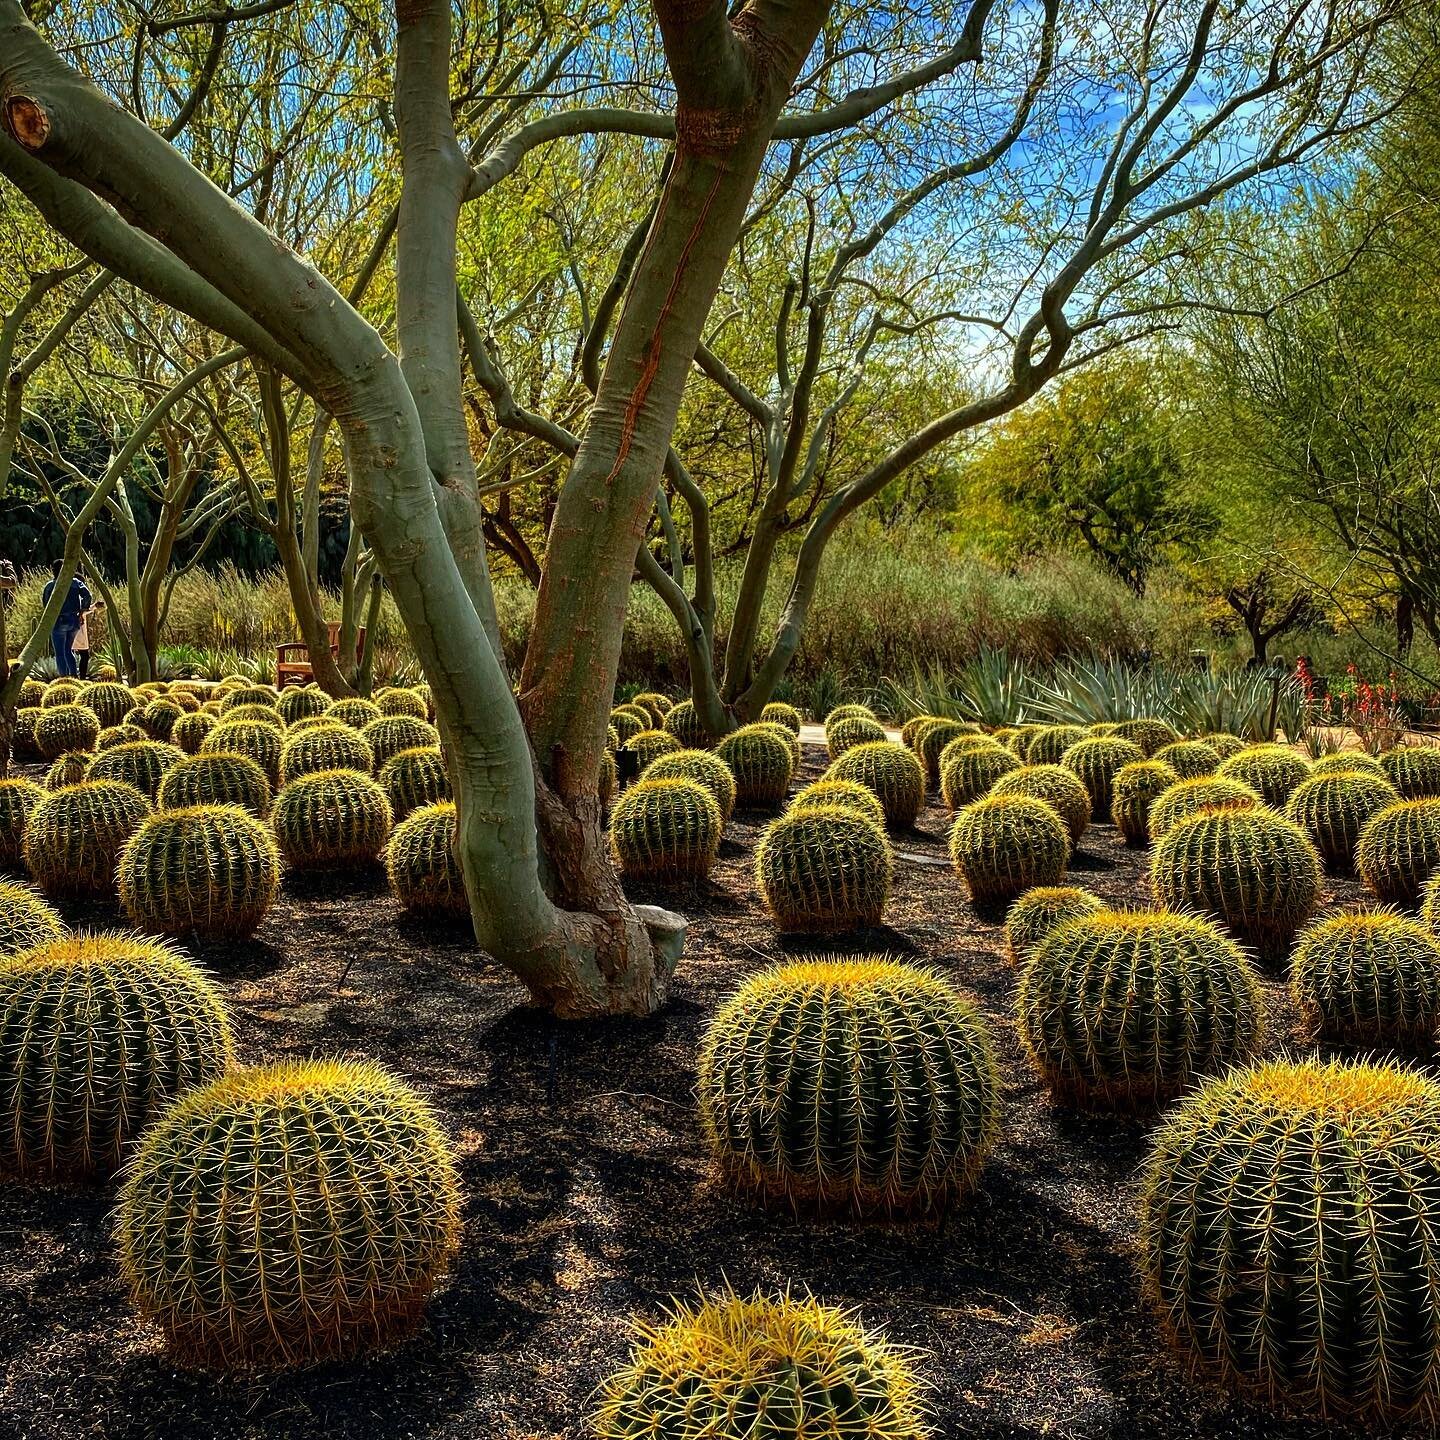 🌵Such a strange and wonderful place🏜 #california #desert #cacti #strange #wonderful #garden #plants #nature #travel #ranchomirage #さぼてん #desierto #landscape